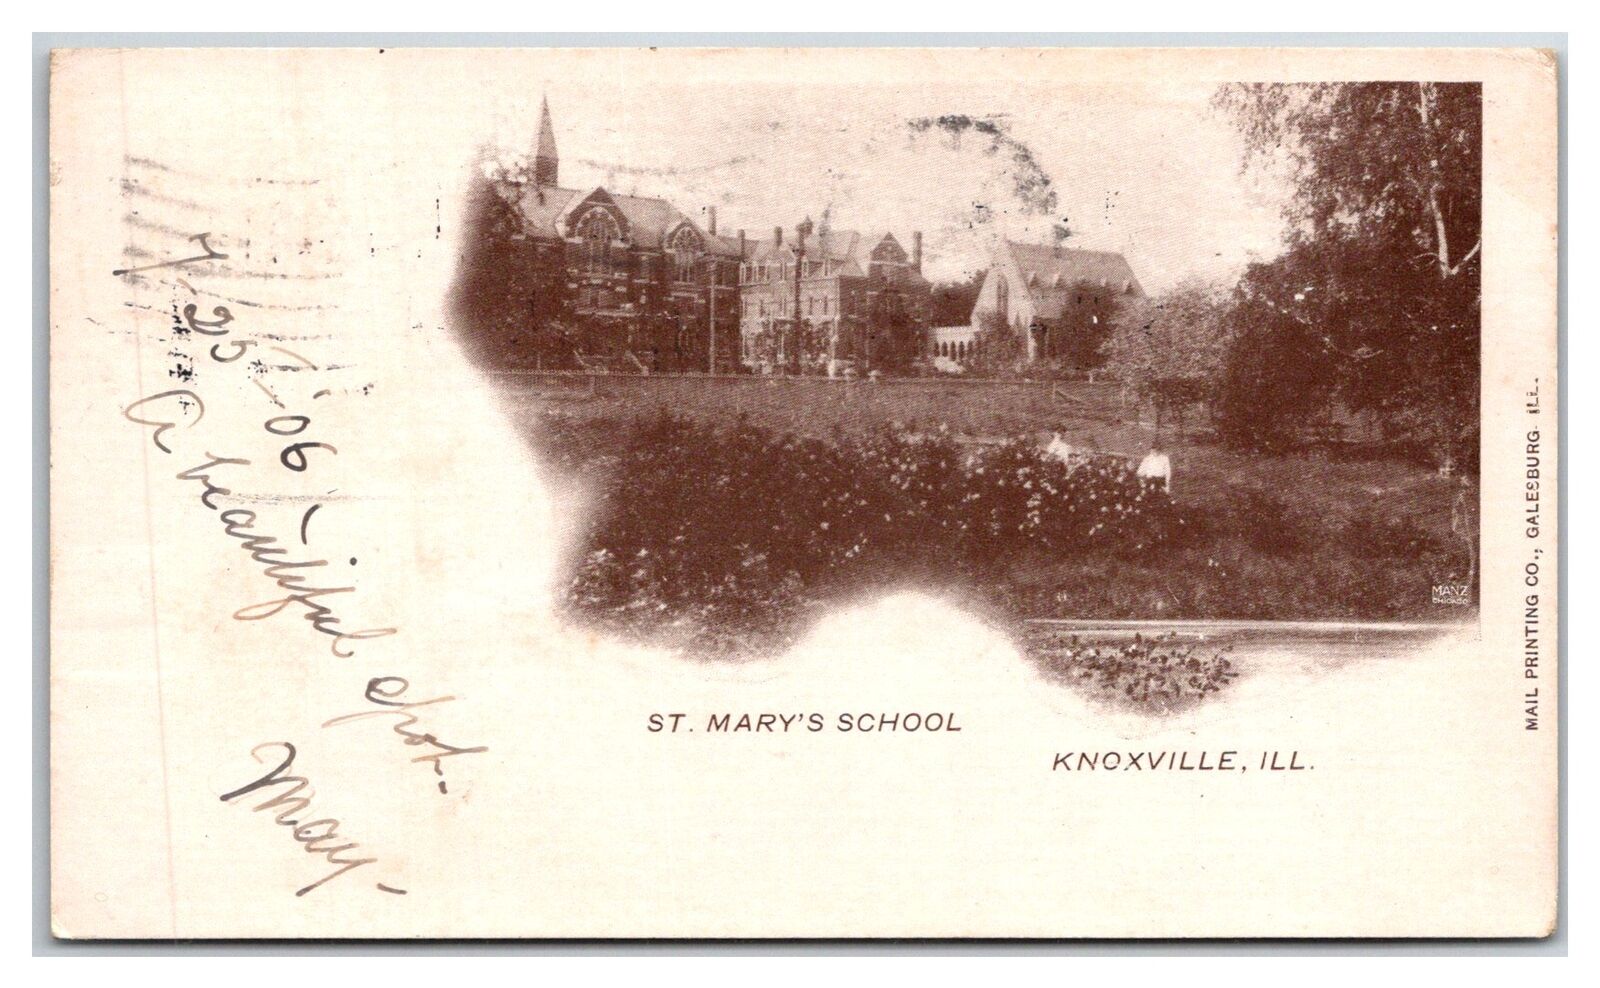 KNOXVILLE Illinois ~ St. Mary's School Rar view 1905